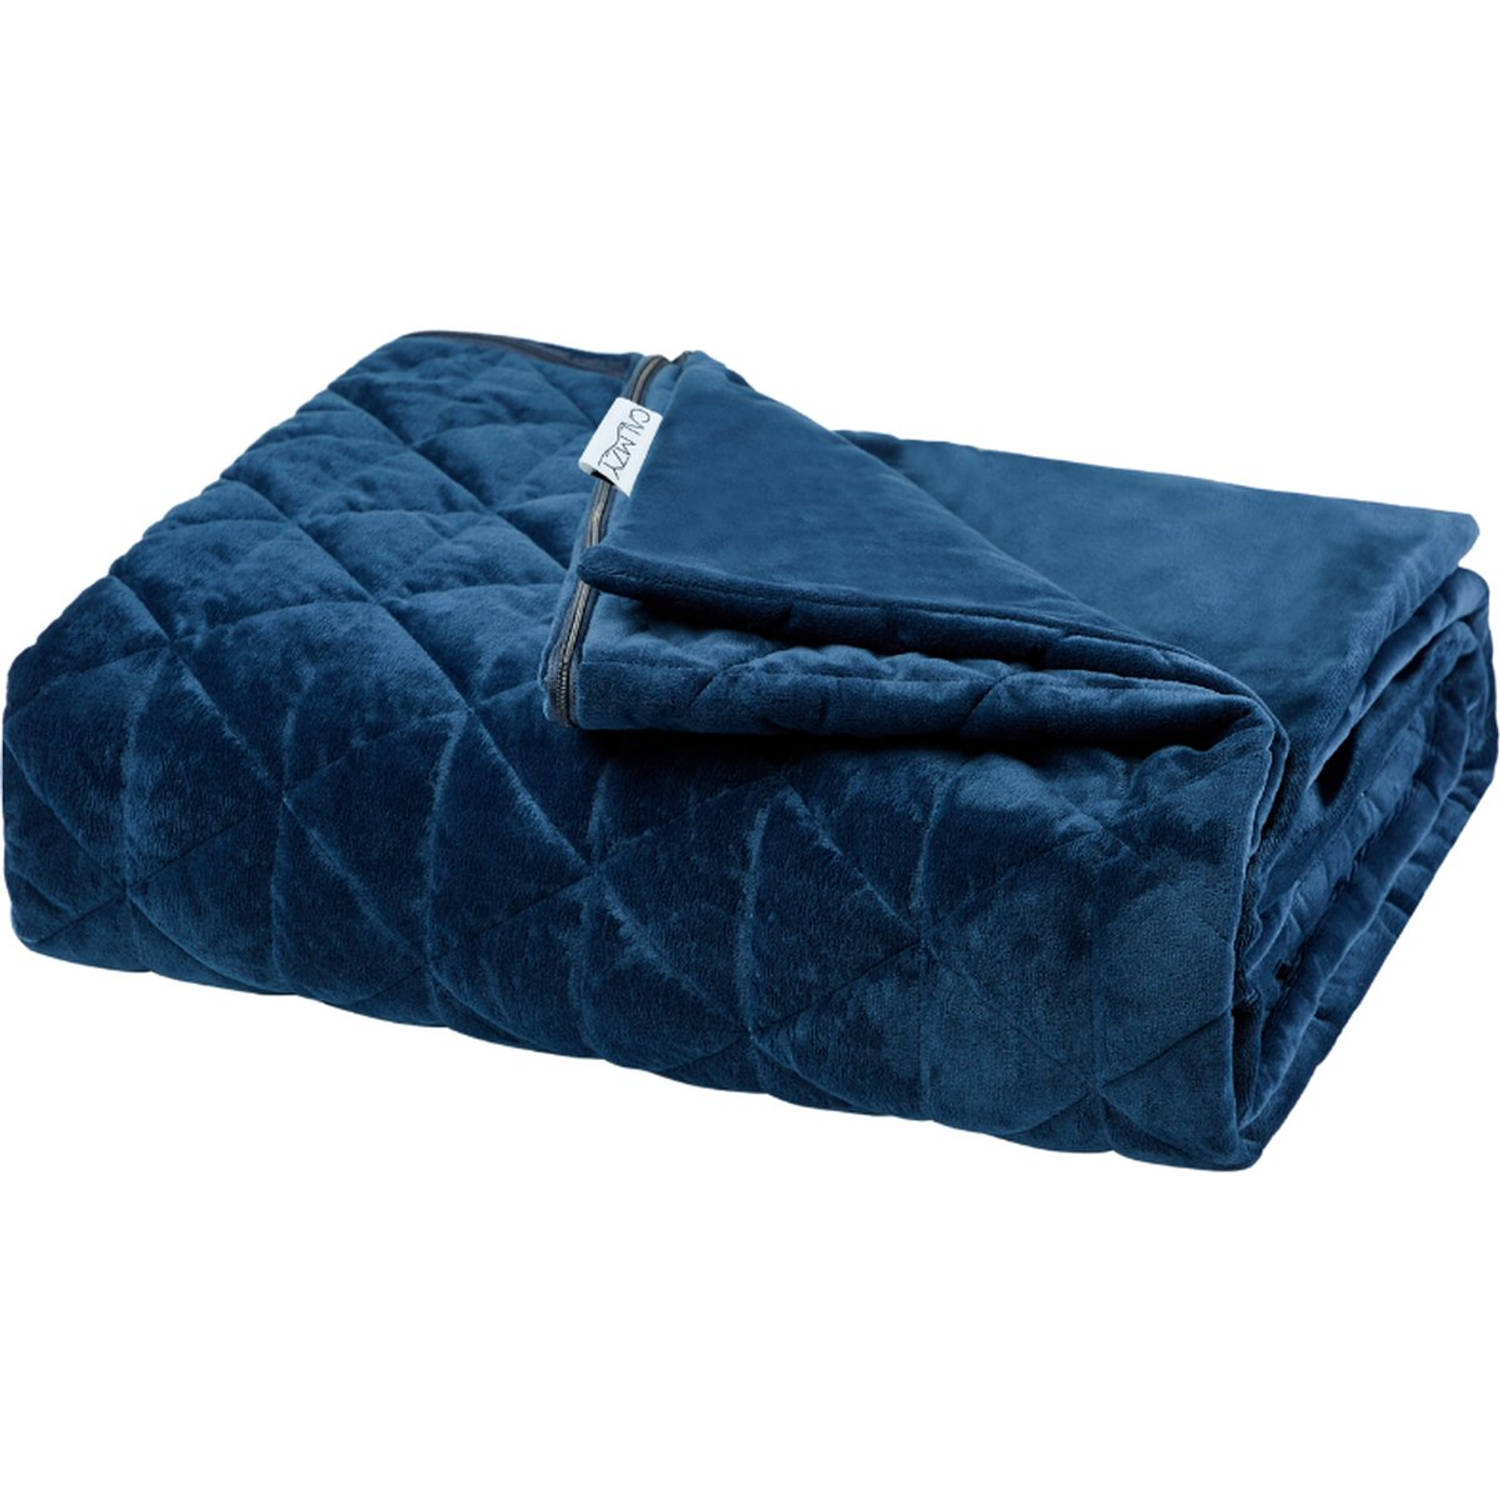 Calmzy Superior Soft - Duvet cover - Verzwaringsdeken hoes - 150 x 200 cm - Superzacht - Comfortabel - Navy